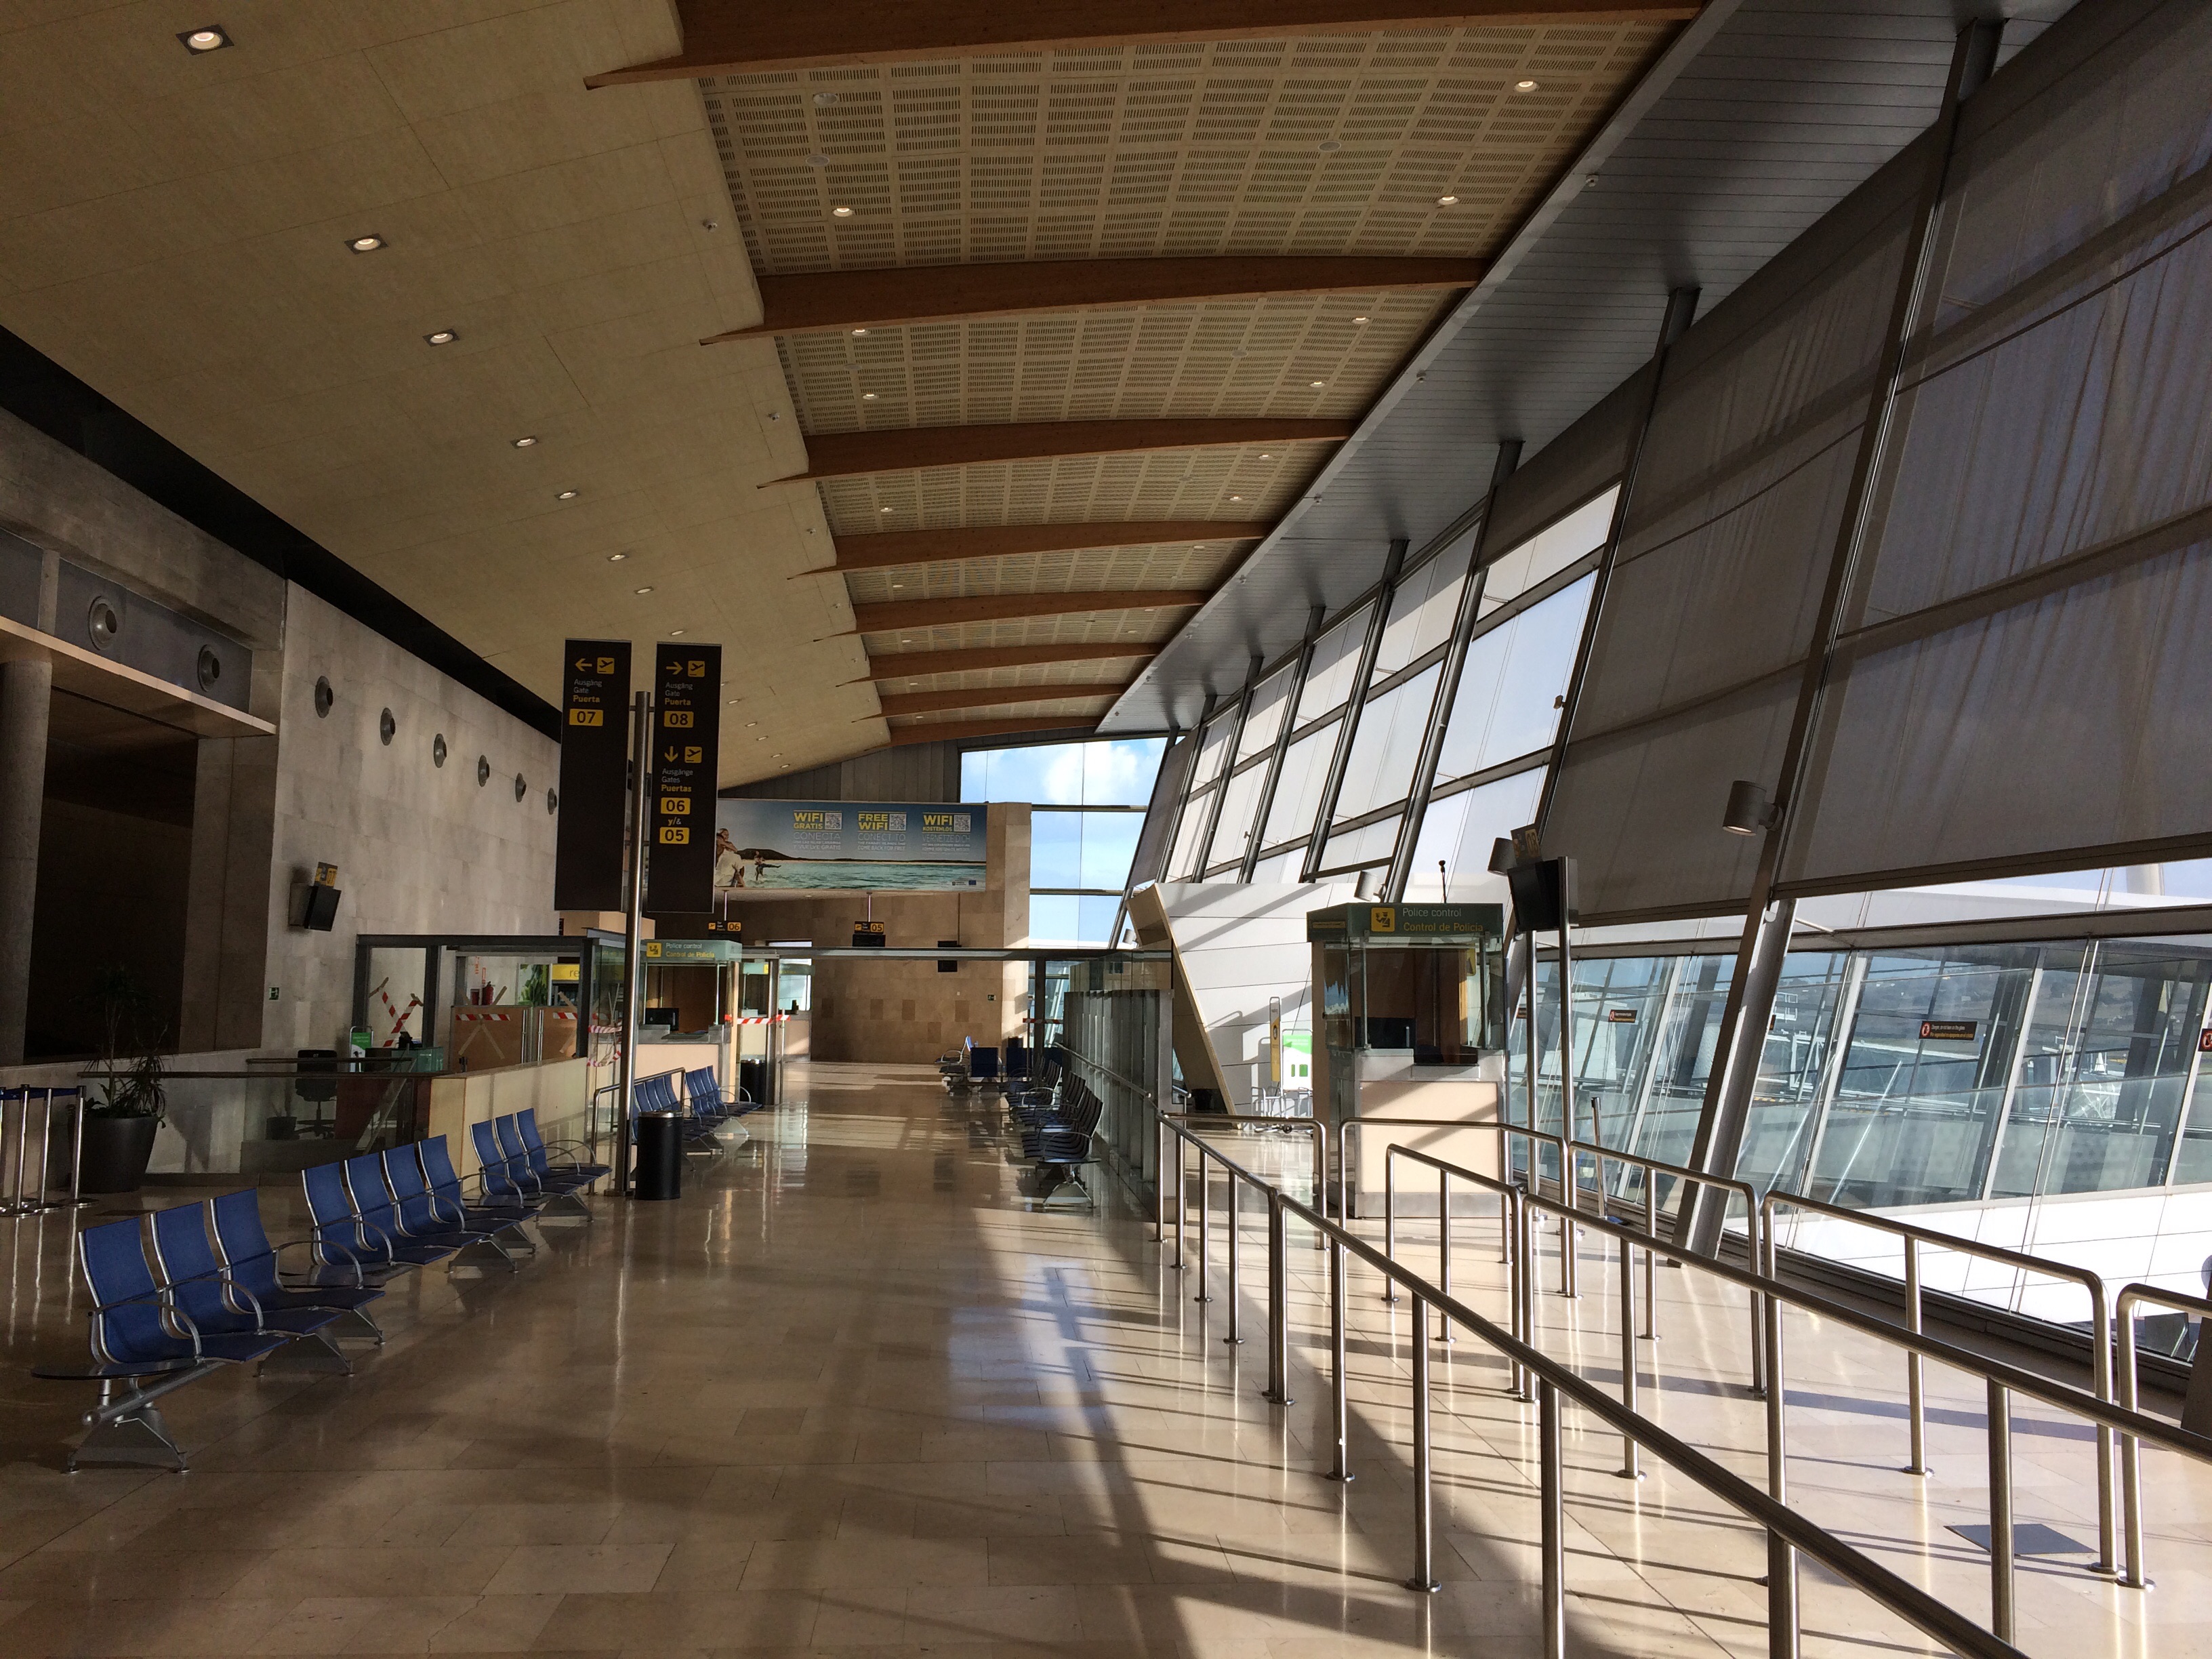 Tenerife Airport Customer Reviews | SKYTRAX